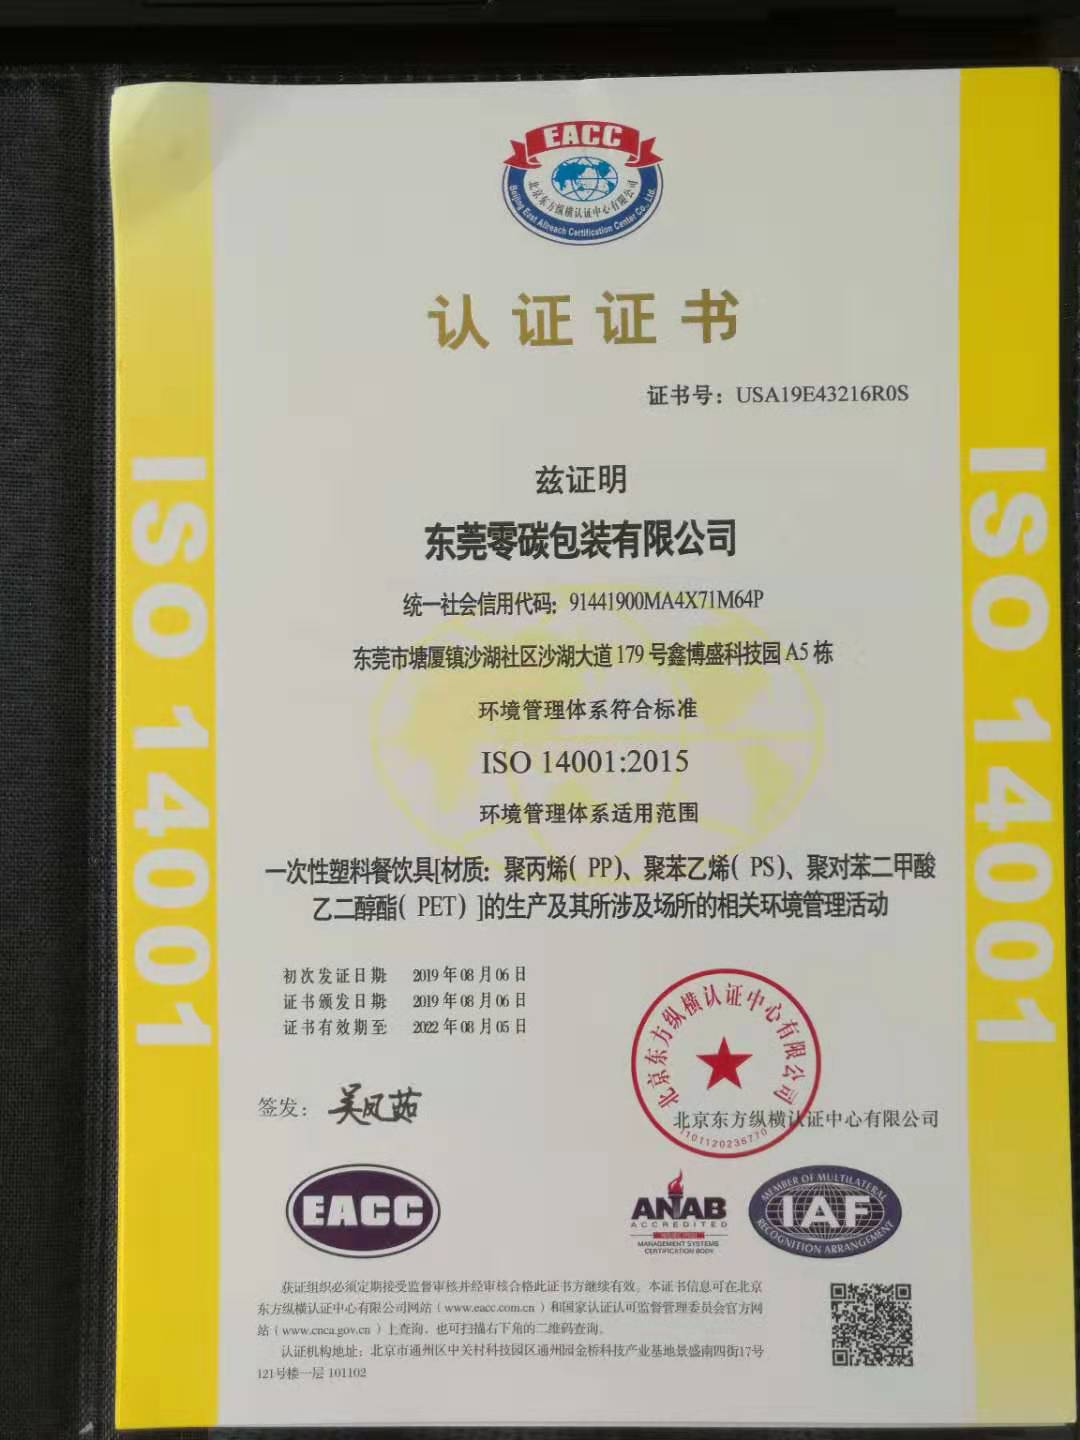 公司通过 ISO 14001:2015认证